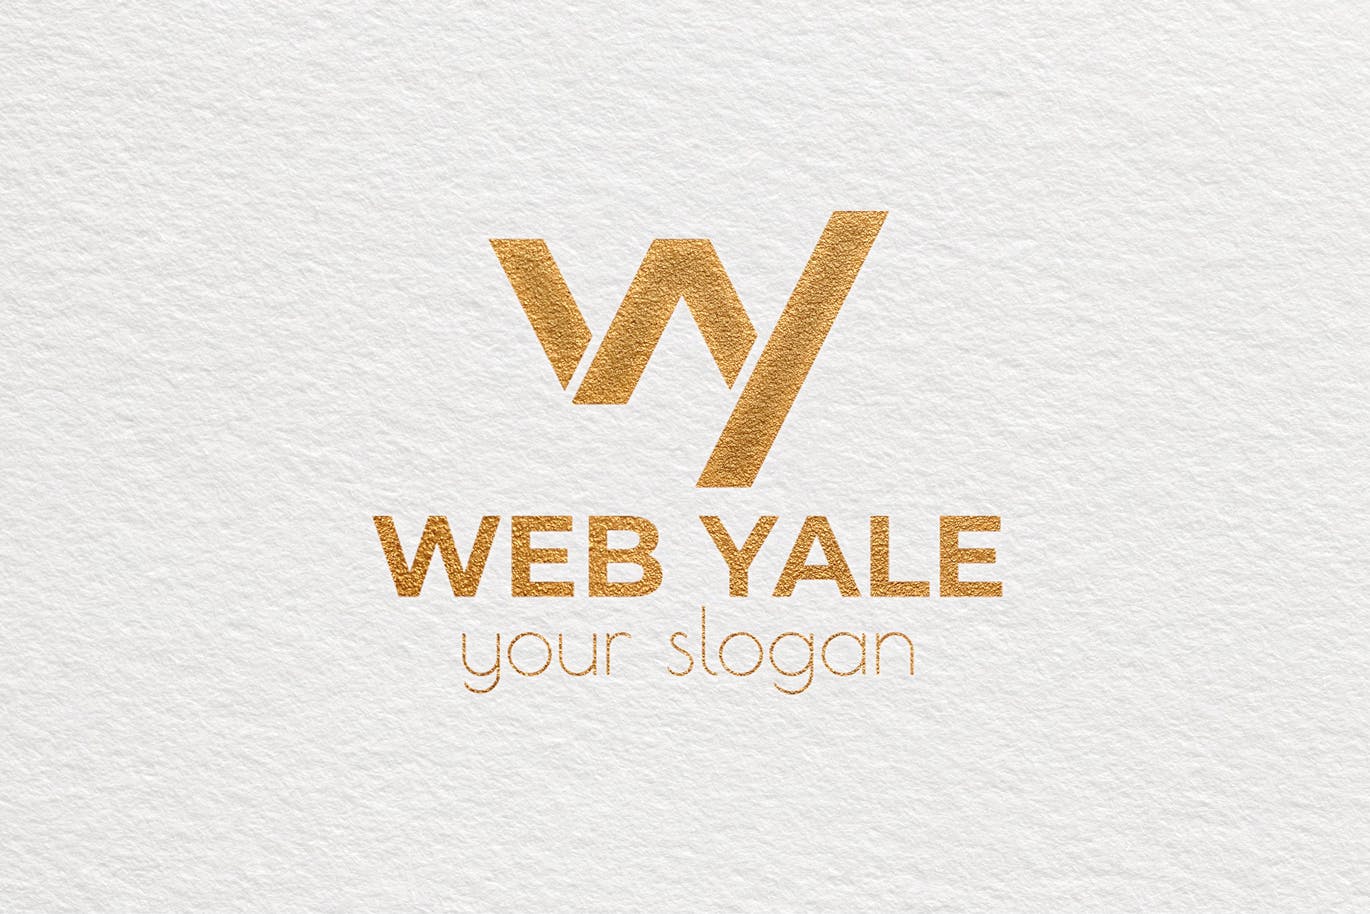 W&Y字母组合几何图形现代Logo设计16图库精选模板 Web Yale Modern Logo Template插图(3)